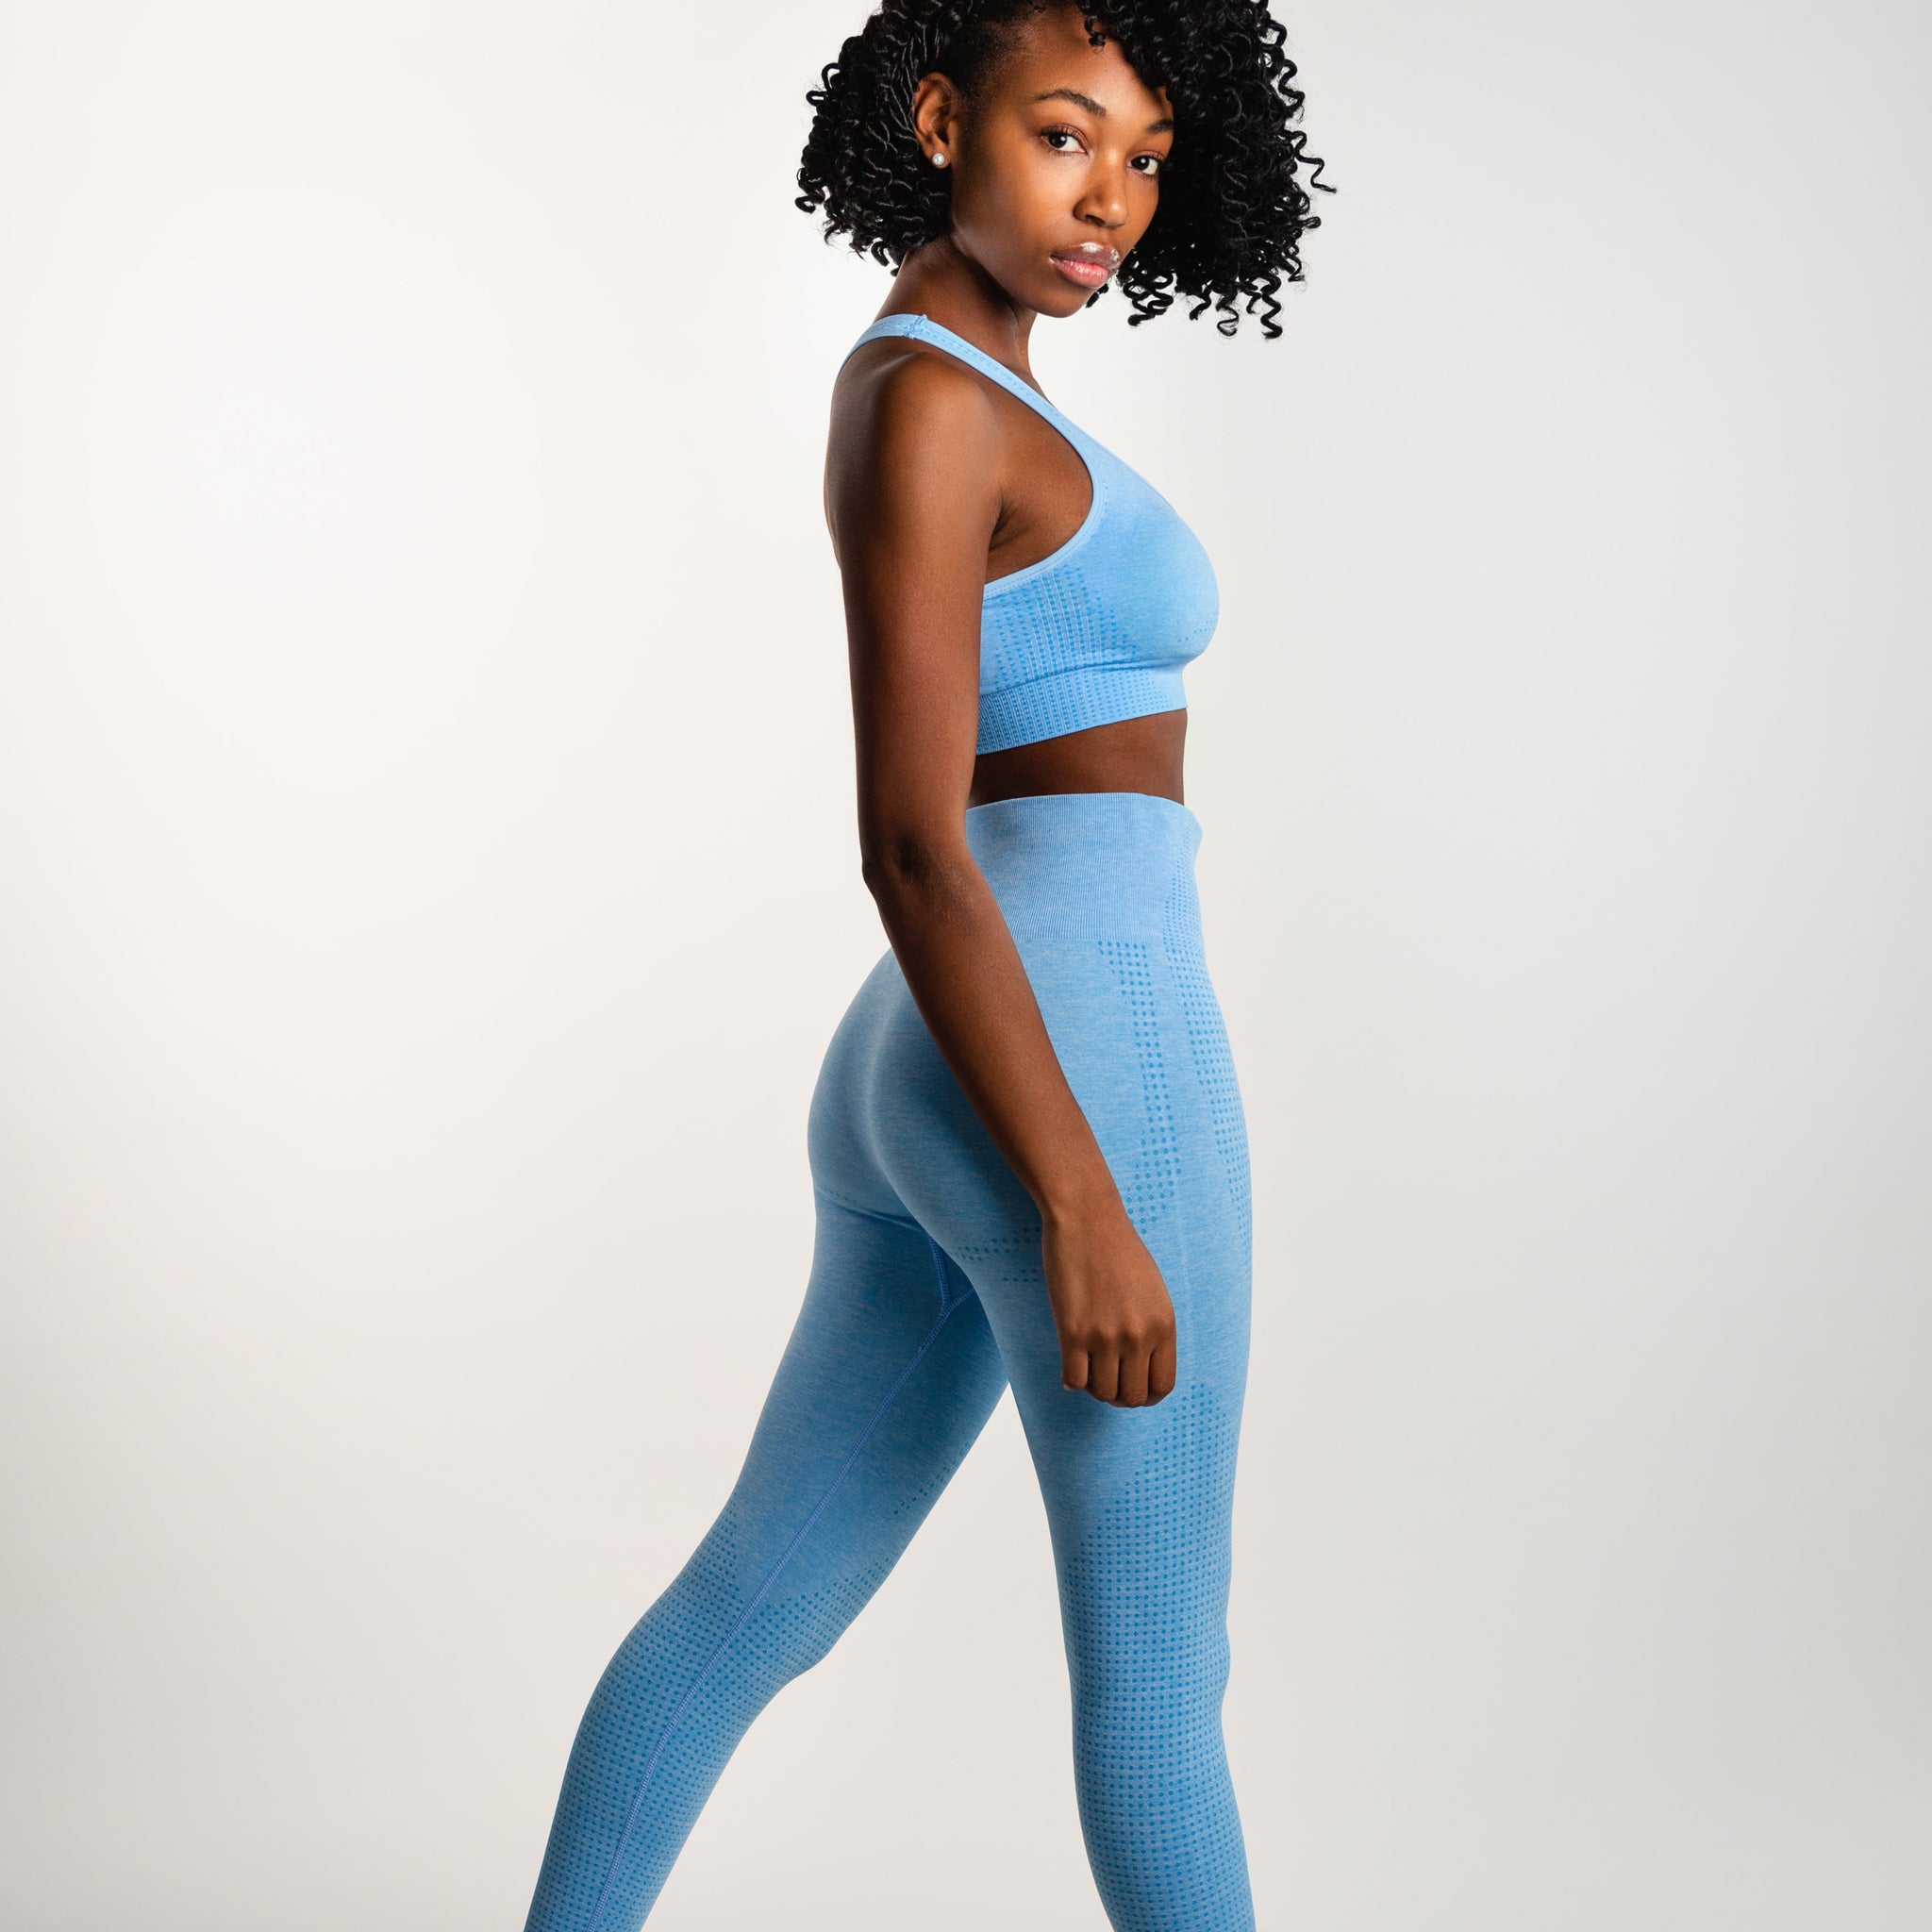 Sport Leggings - MQF Fitness Clothing - Blue